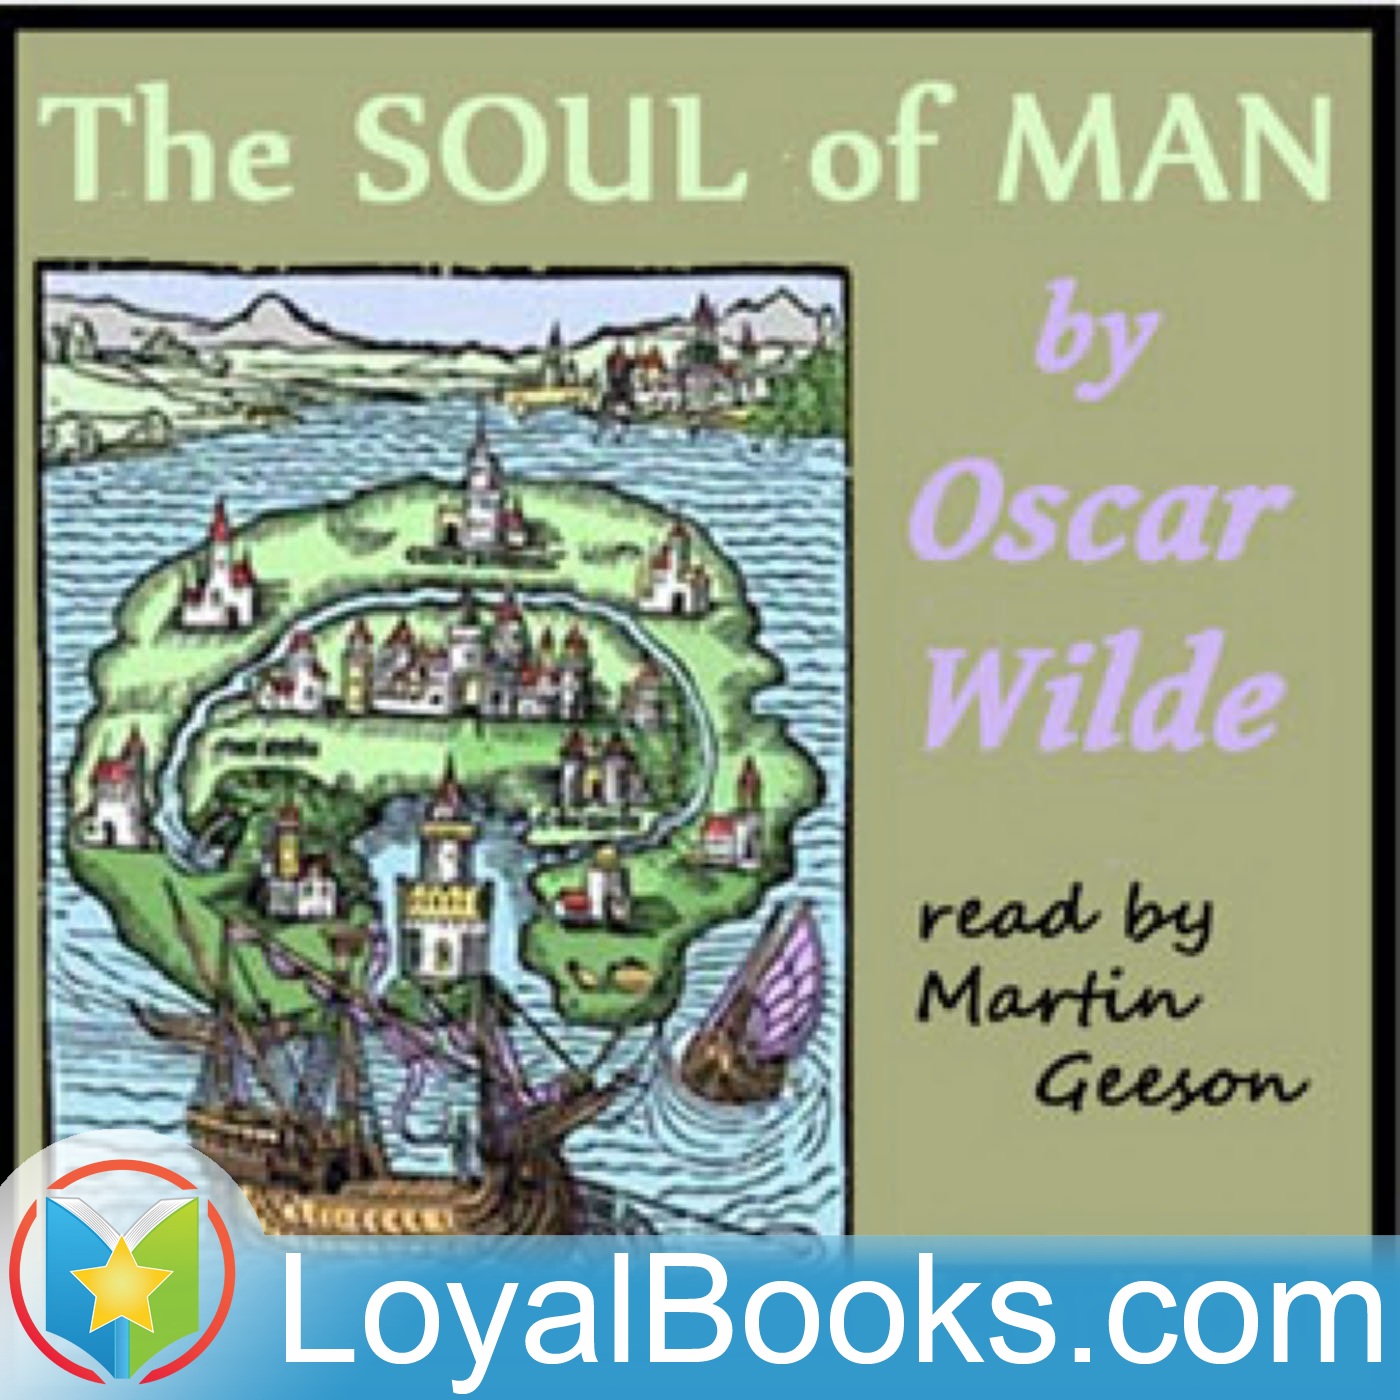 The Soul of Man by Oscar Wilde